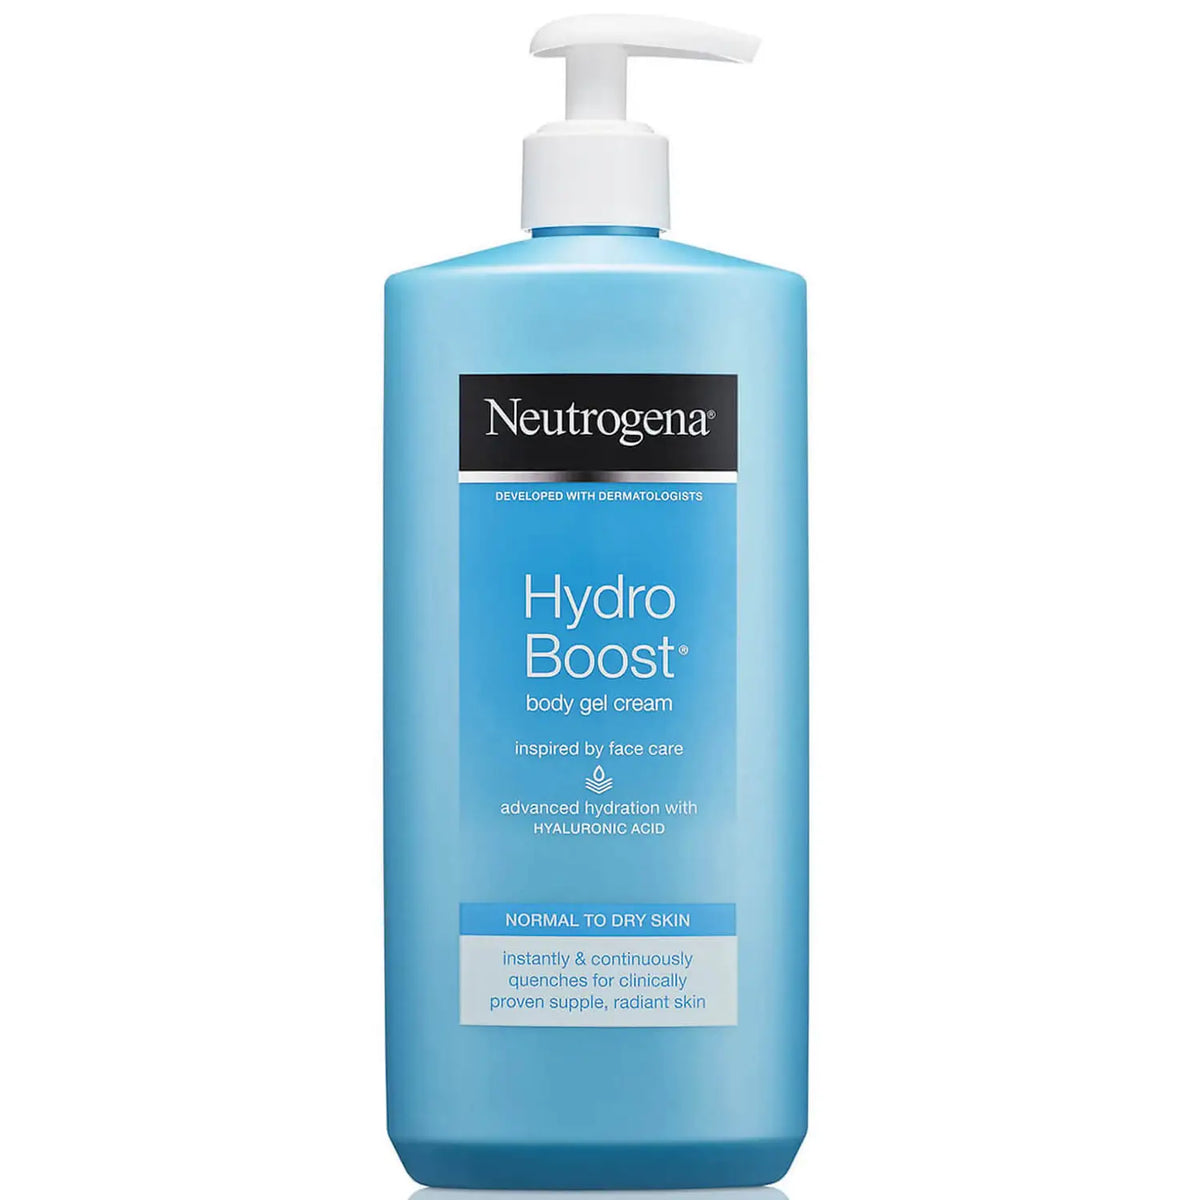 Neutrogena Hydro Boost Body Gel Cream Moisturizer for Normal to Dry Skin 250ml